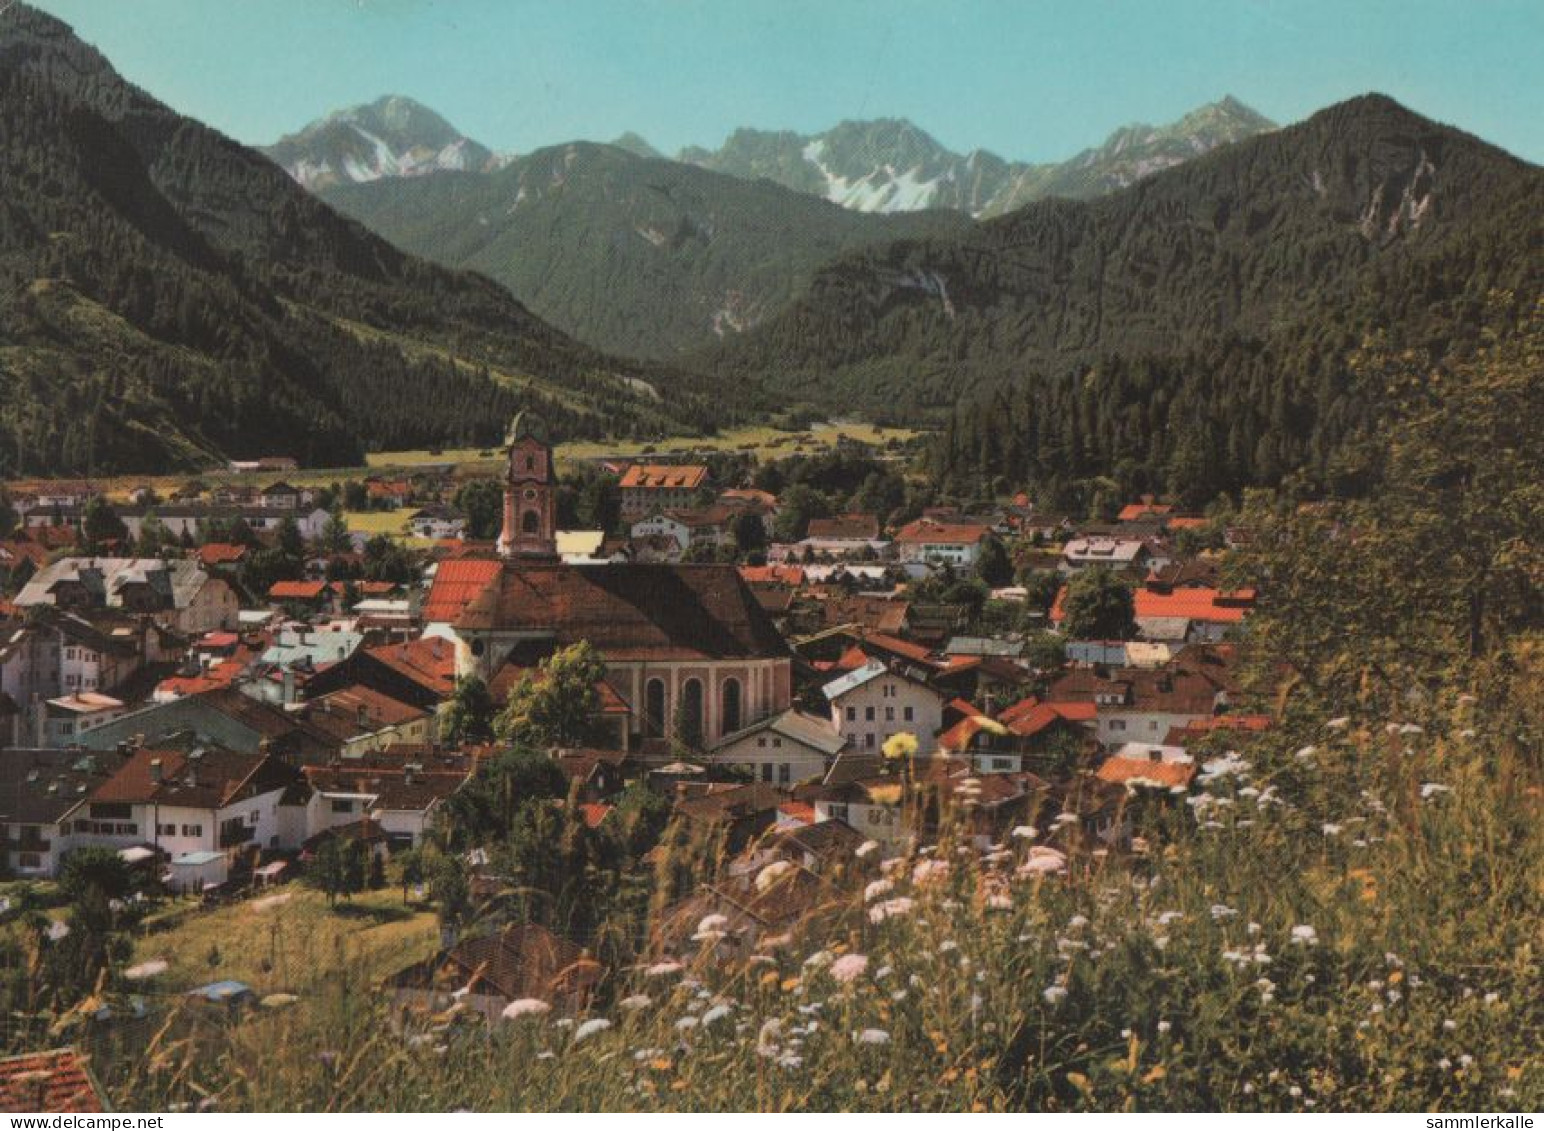 27807 - Mittenwald - Gegen Tiroler Berge - Ca. 1980 - Mittenwald